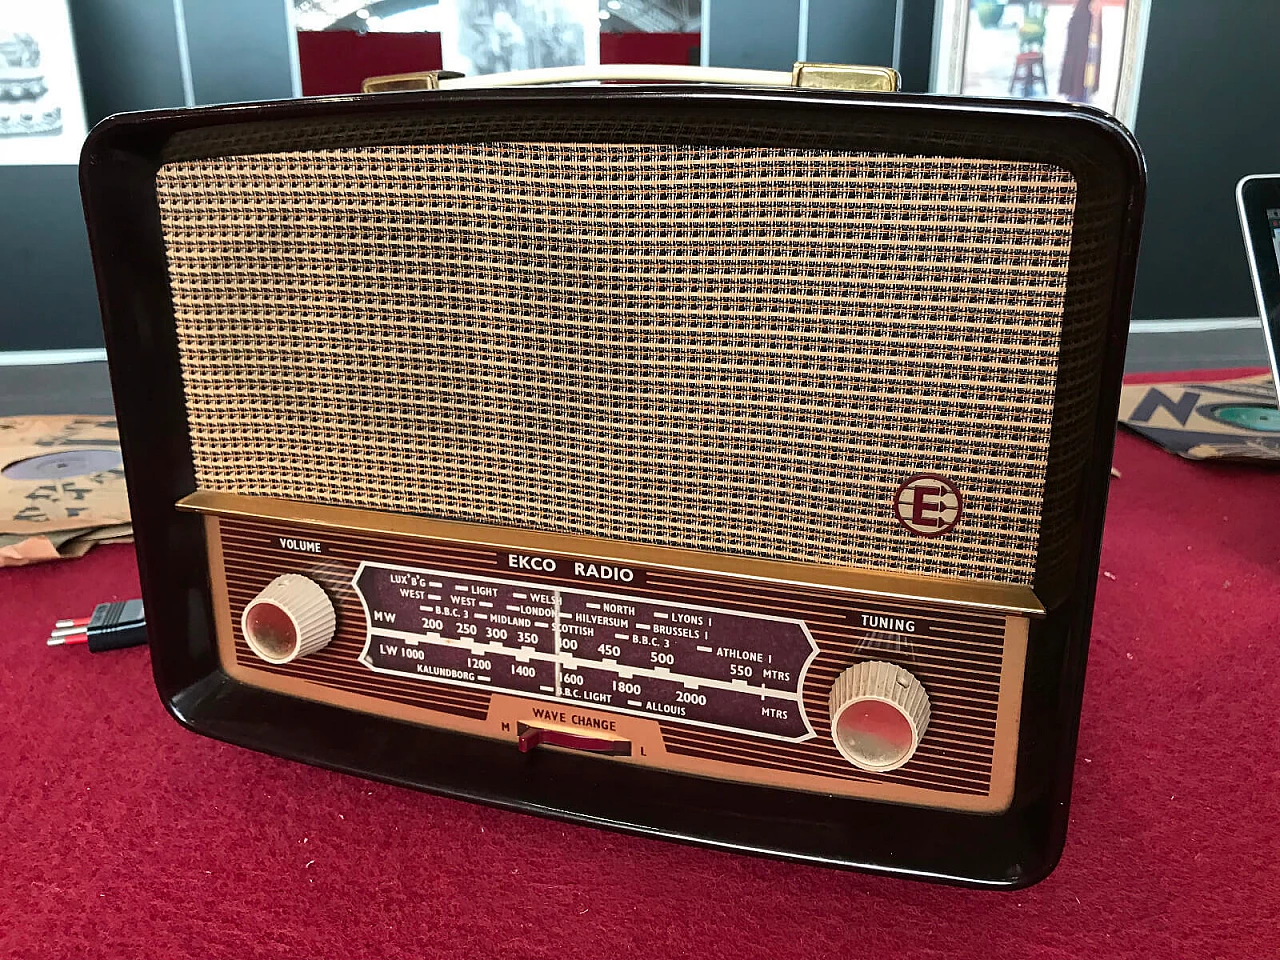 English radio model "U245" of the house Ecko, 50s 2